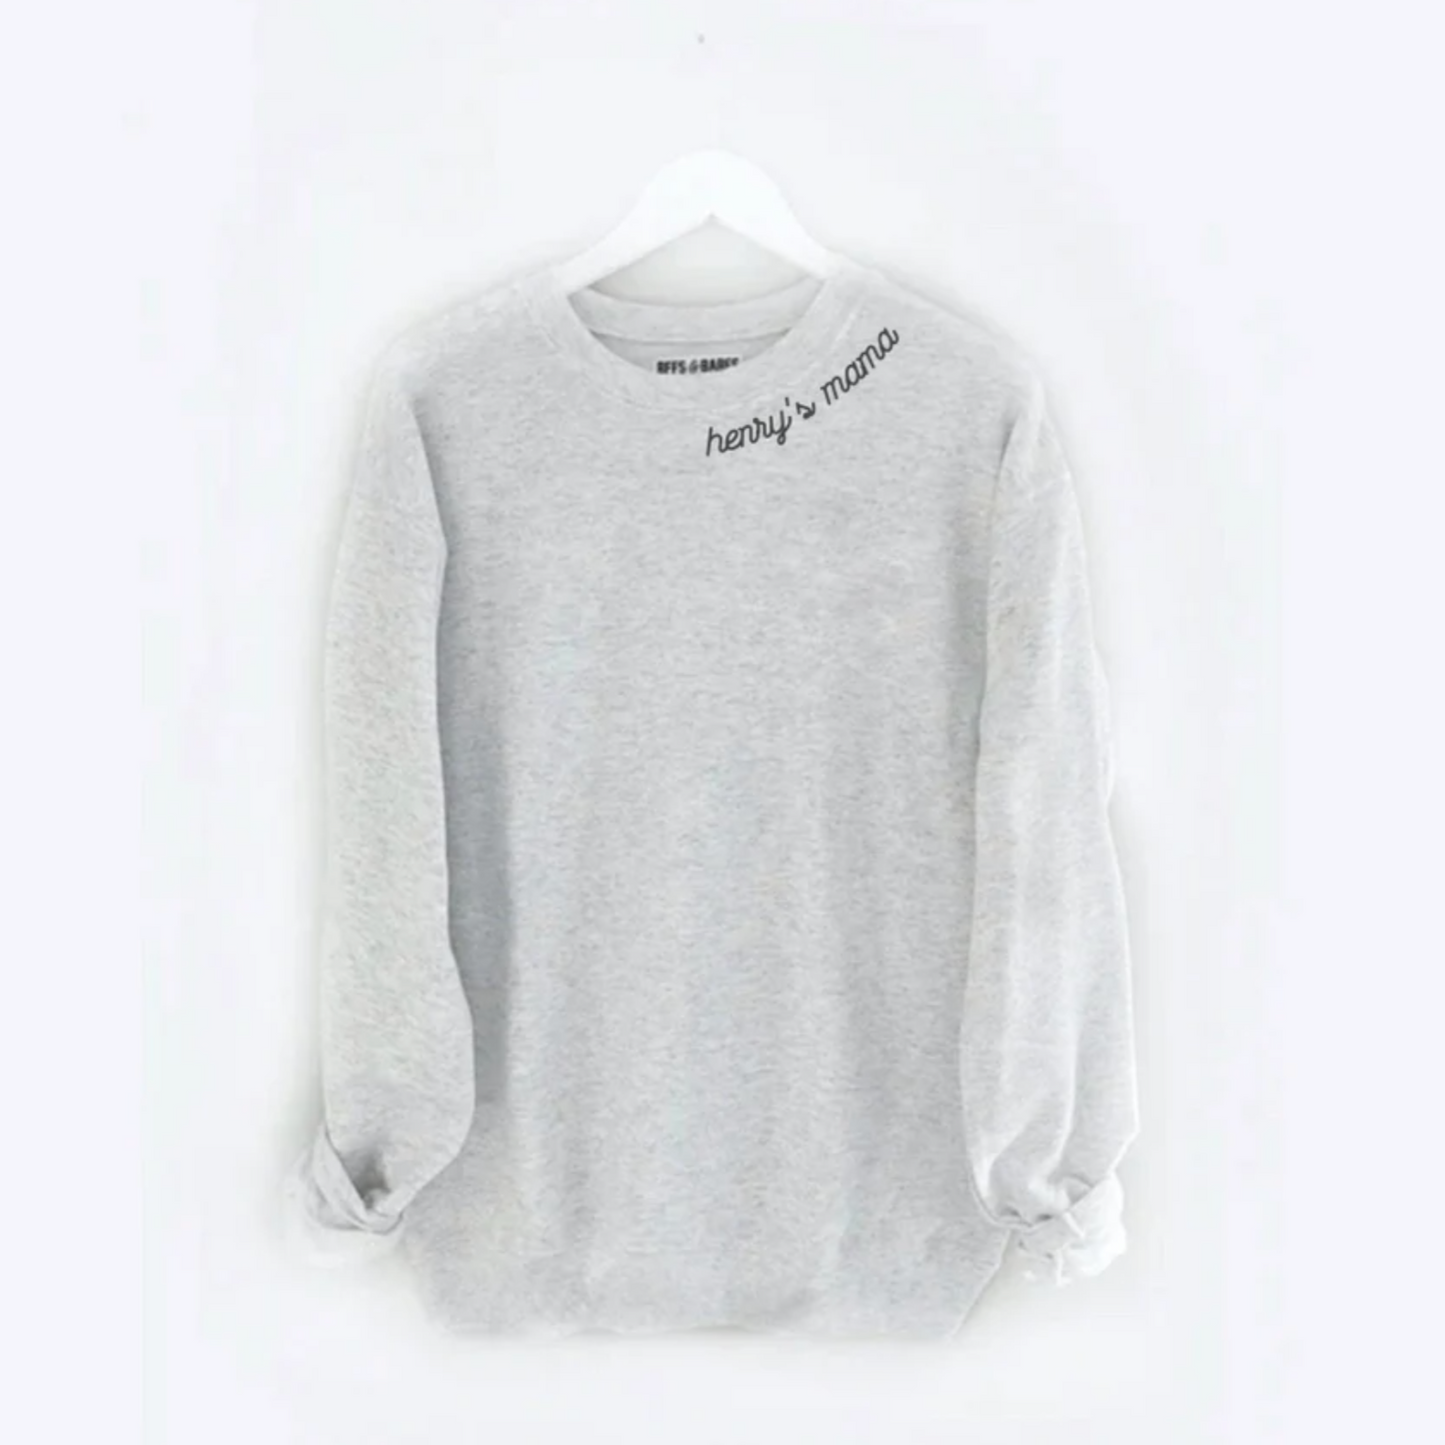 GRAY WITH CUSTOM STITCH ♡ adult embroidered sweatshirt